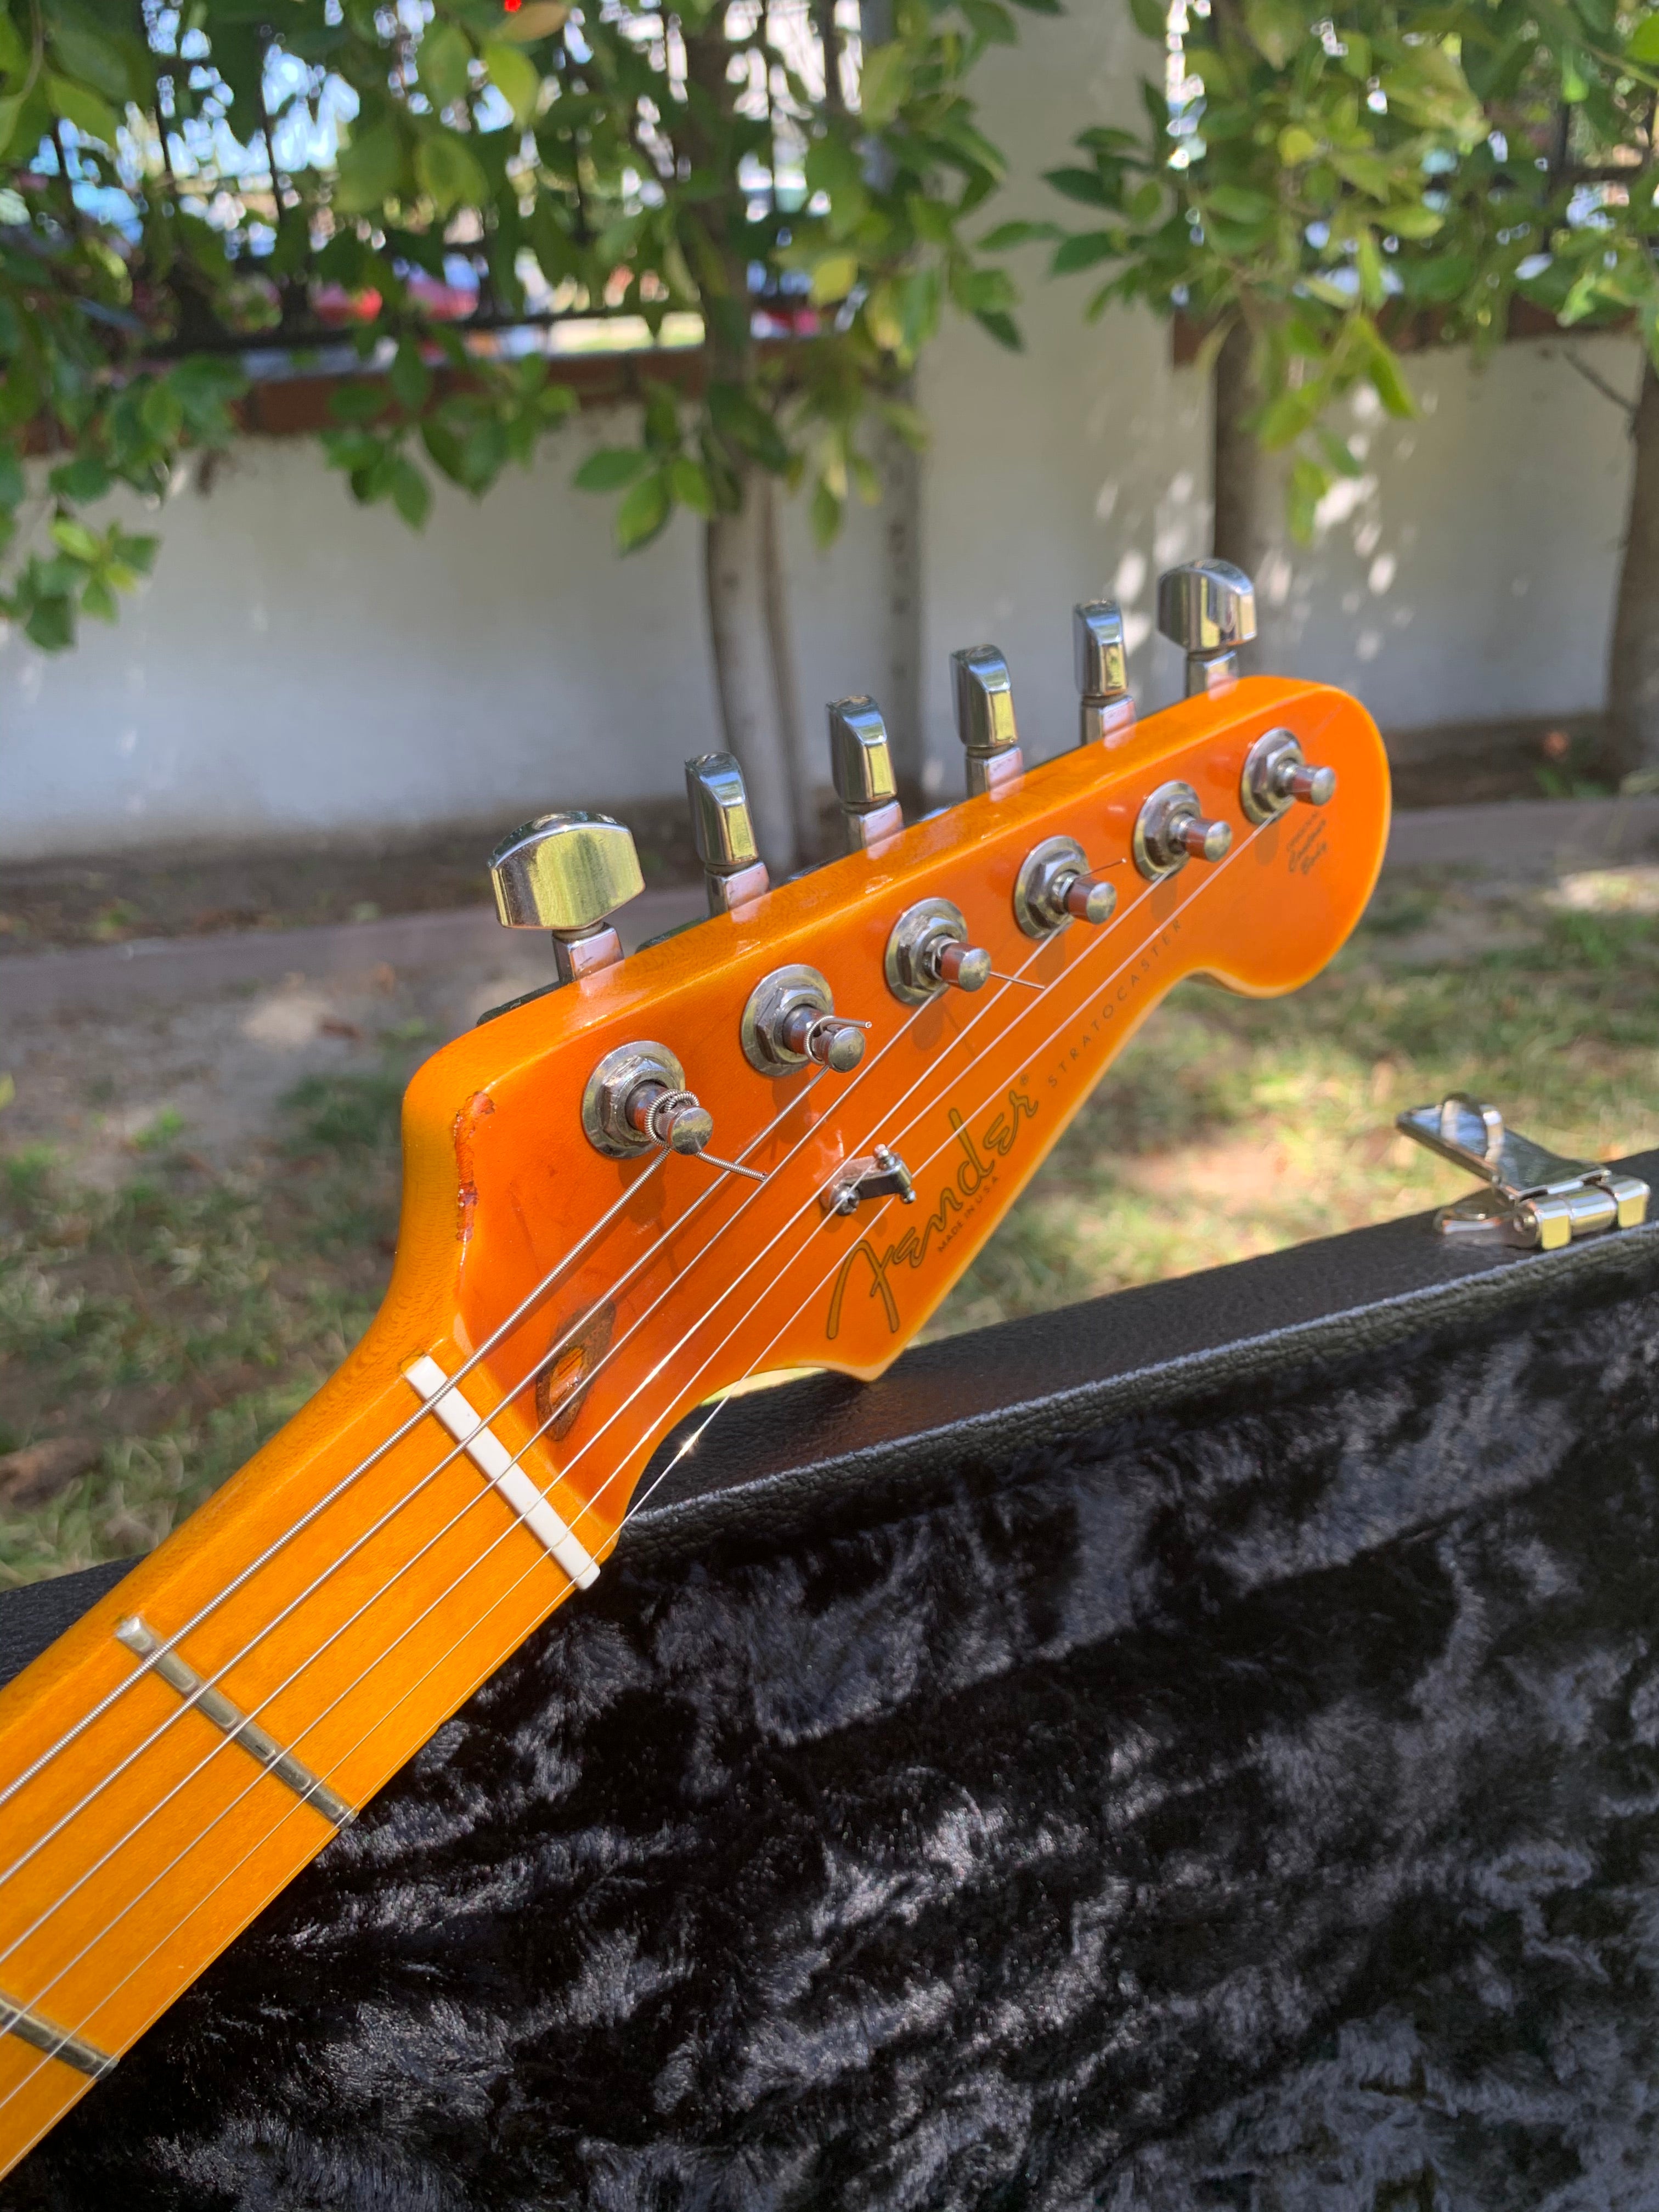 Fender American custom Stratocaster heavy relic